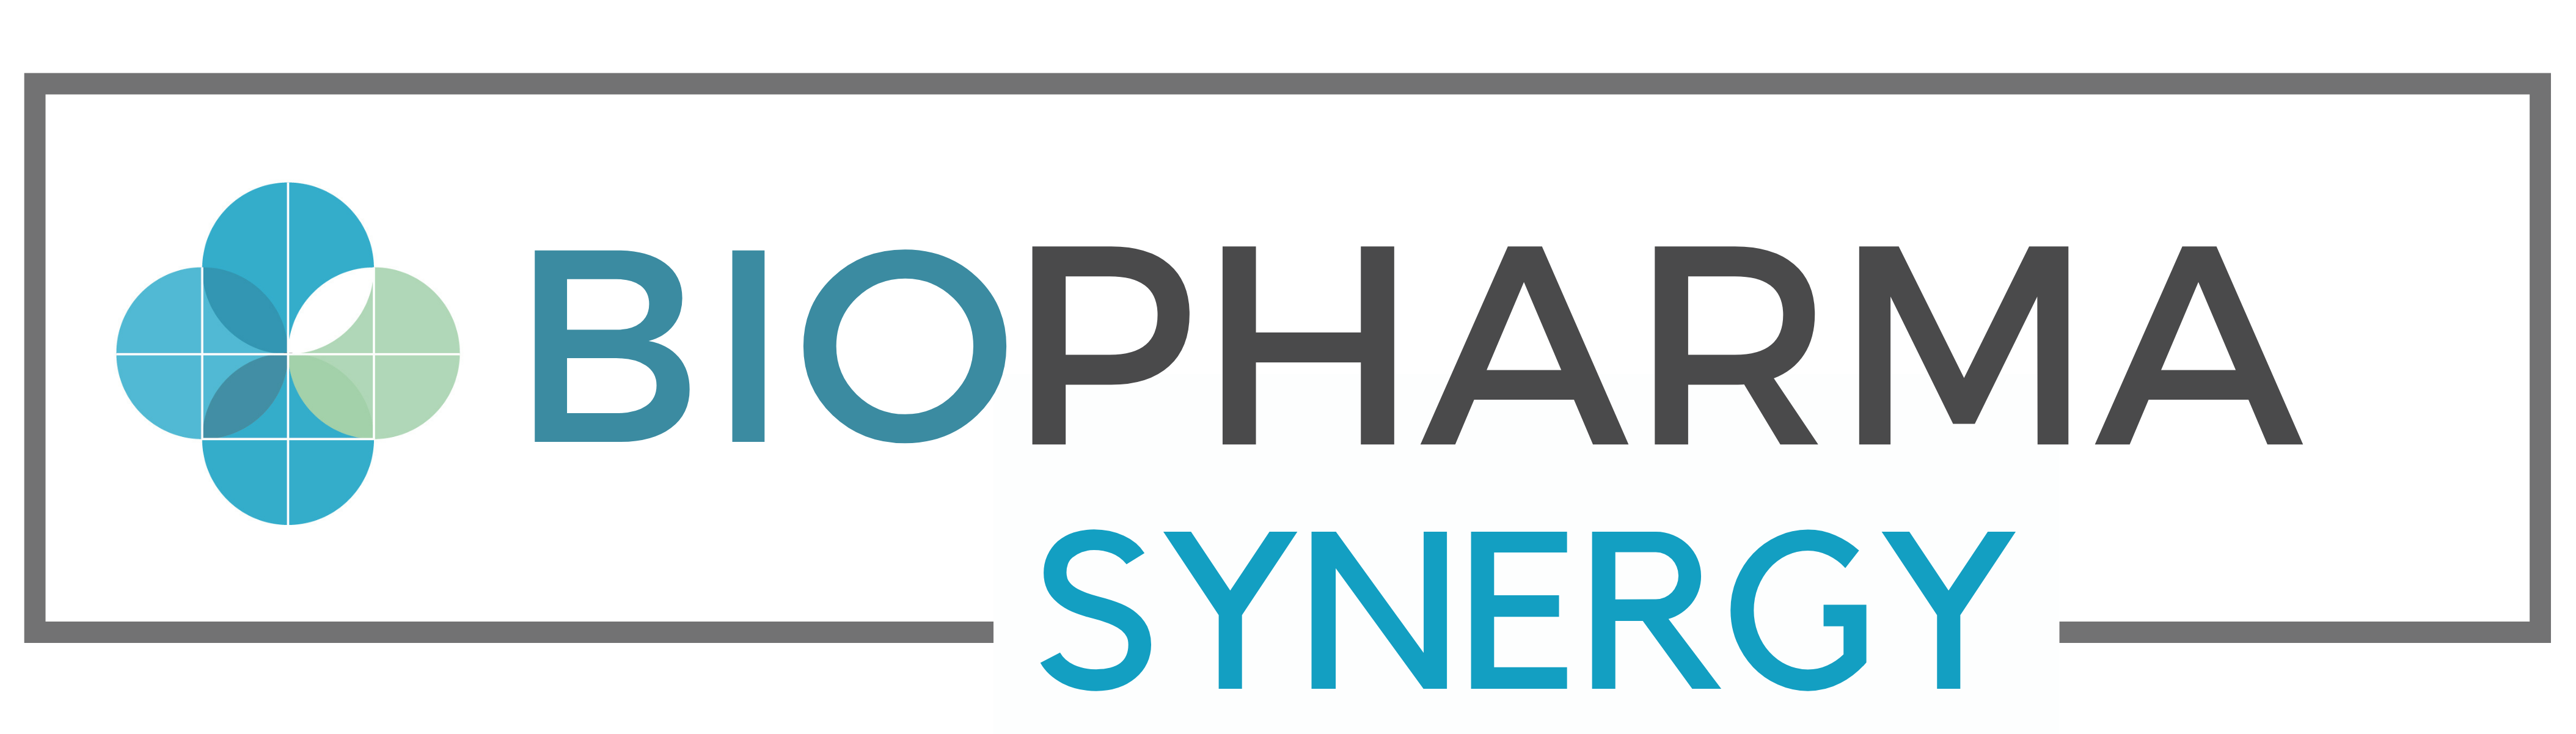 BioPharmaSynergy logo